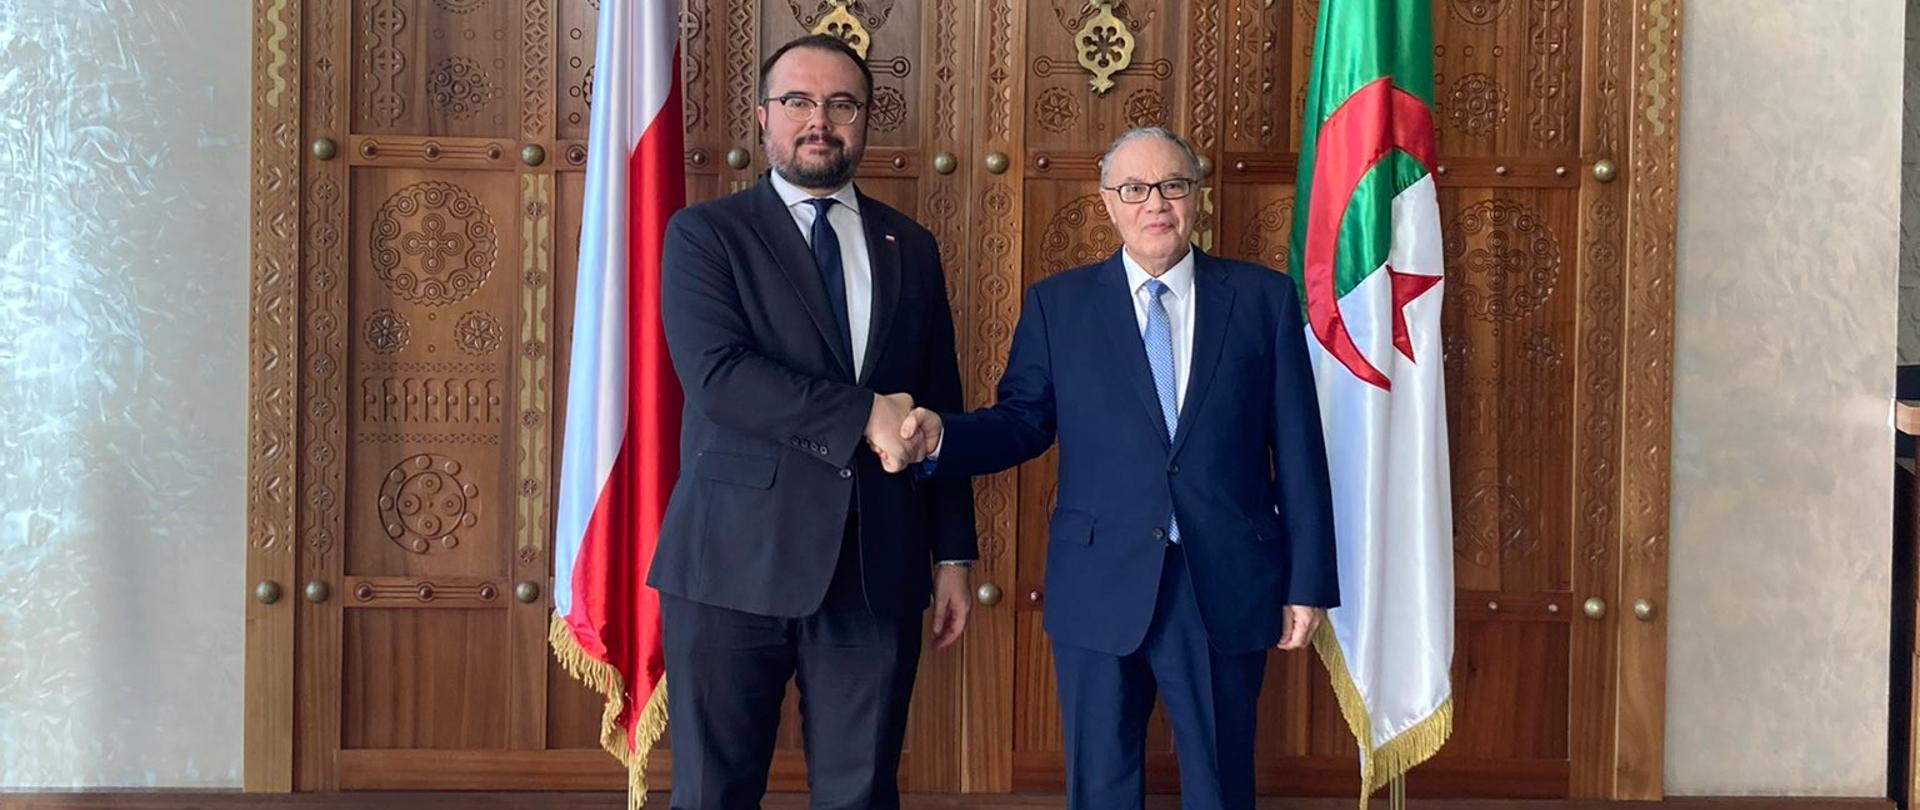 Deputy Minister Paweł Jabłoński paid a visit to Algeria